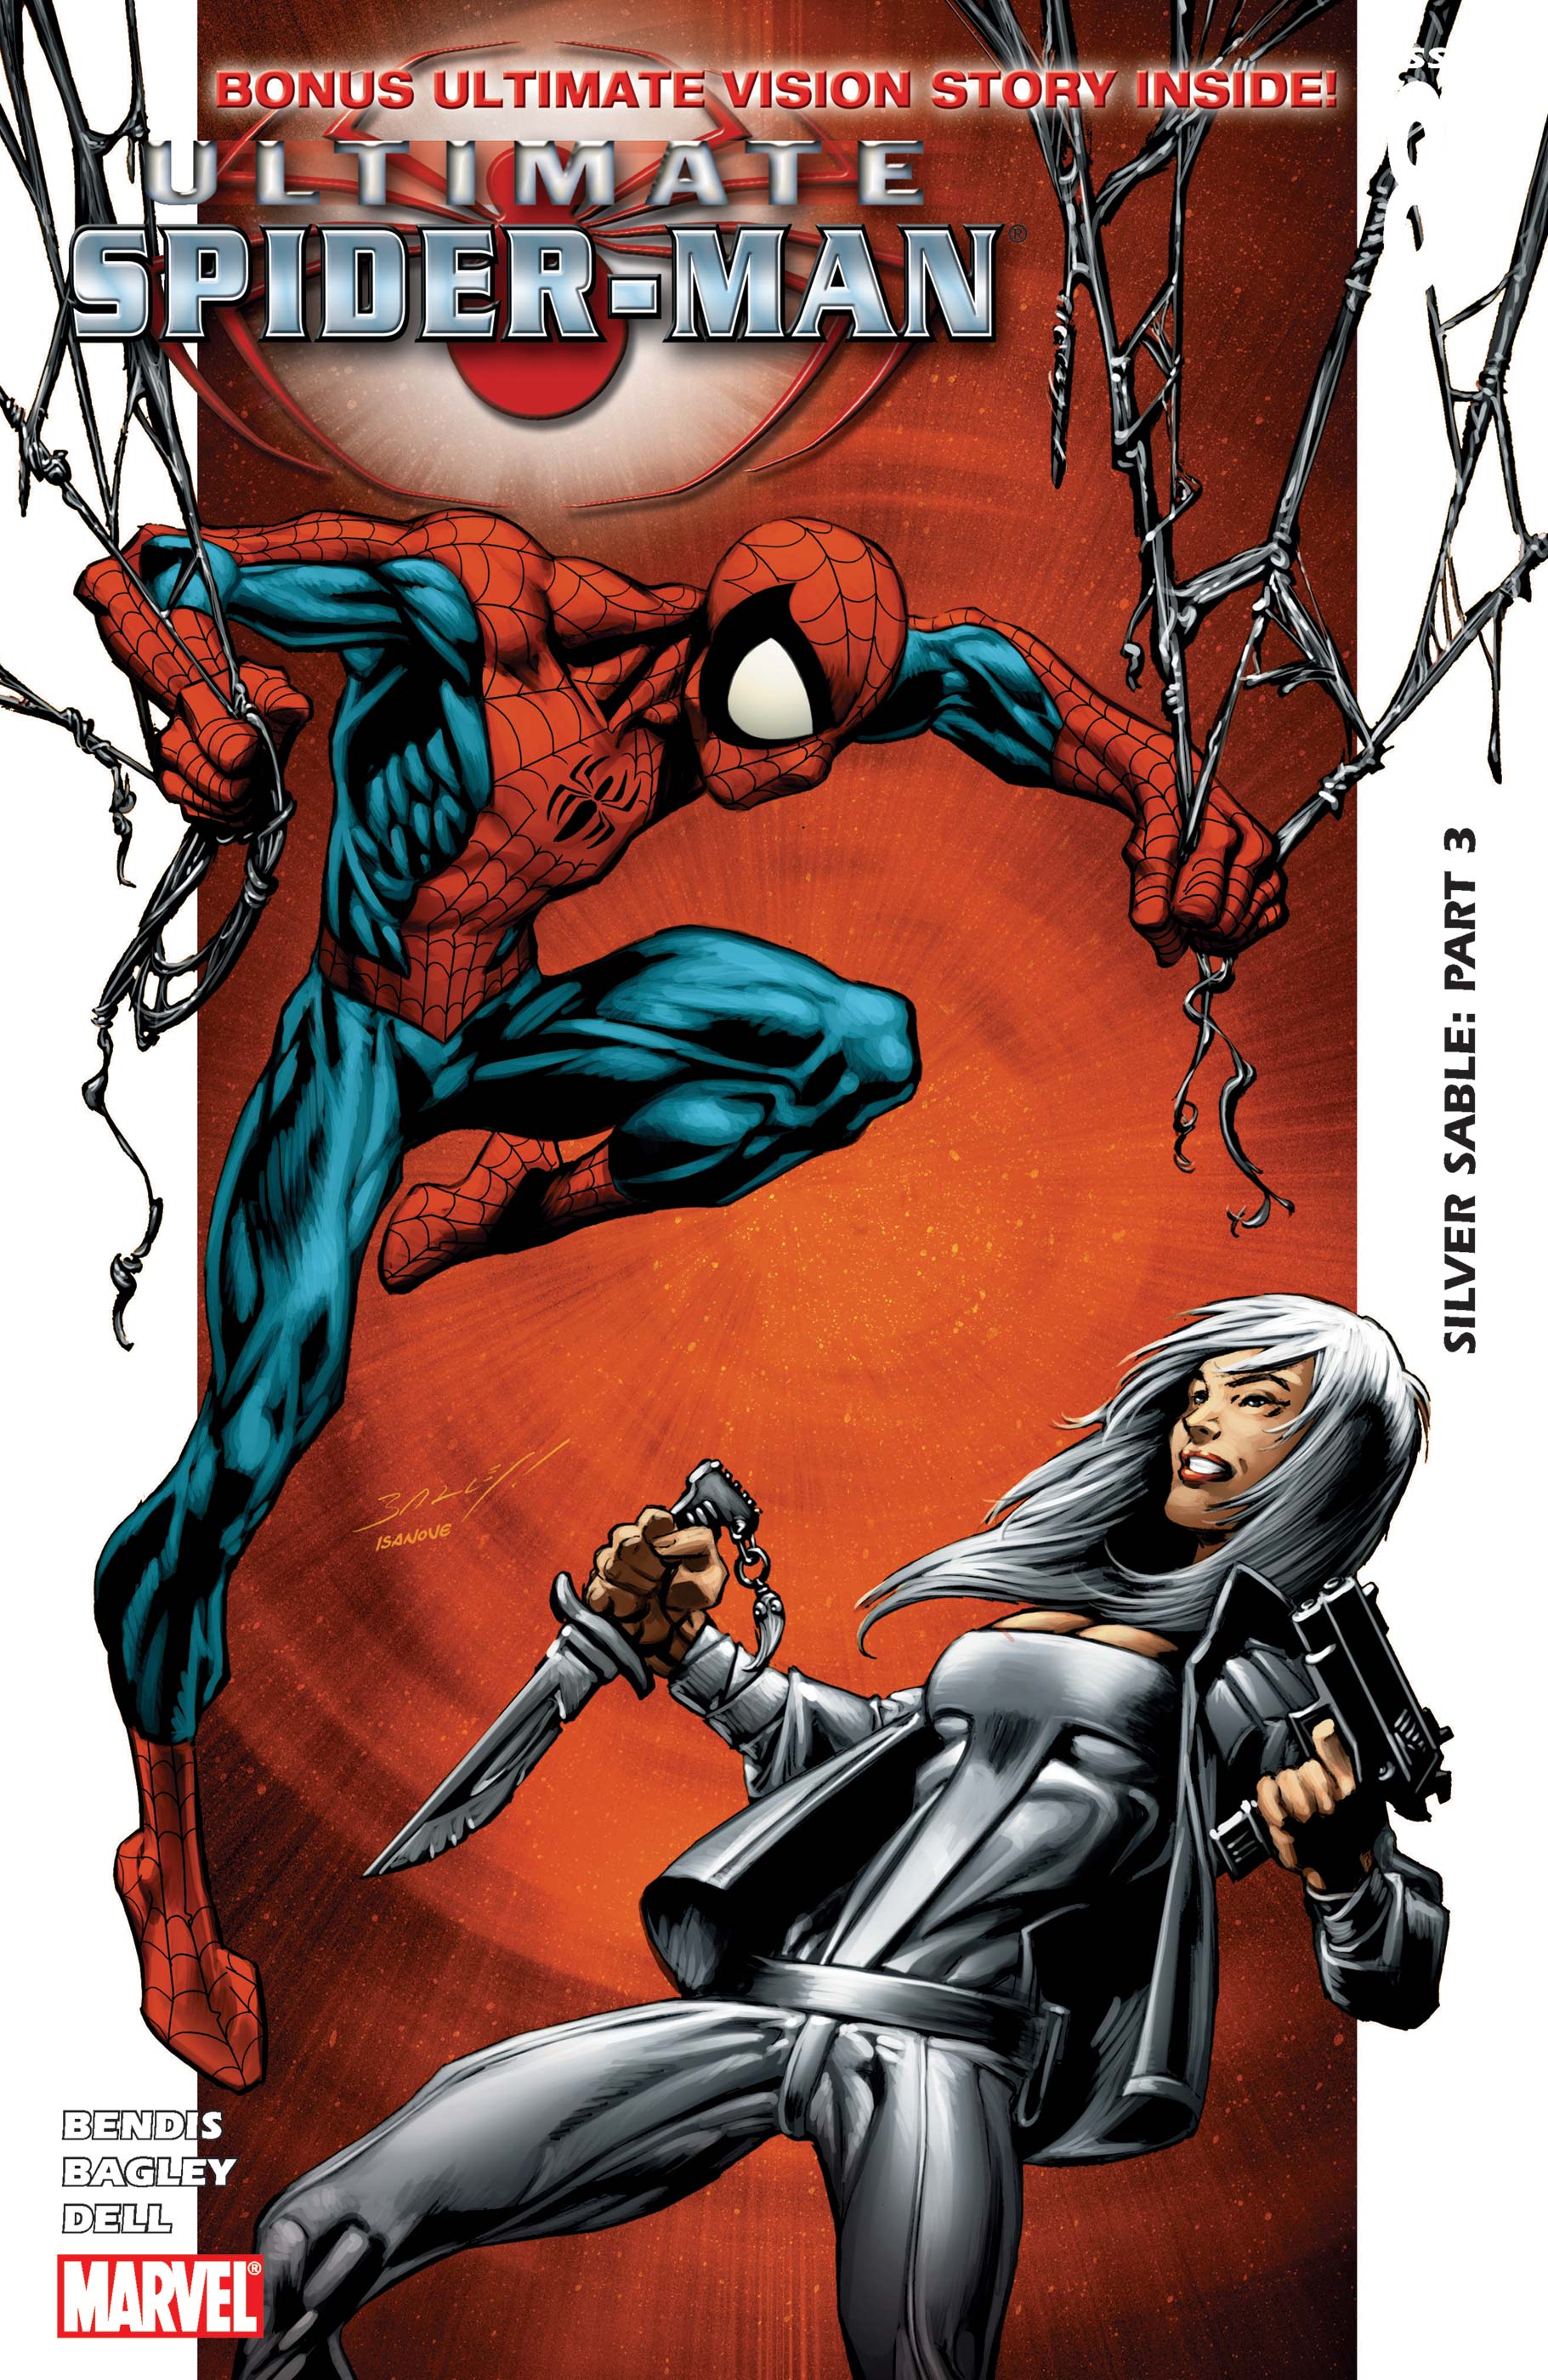 Ultimate Spider-Man (2000) #88